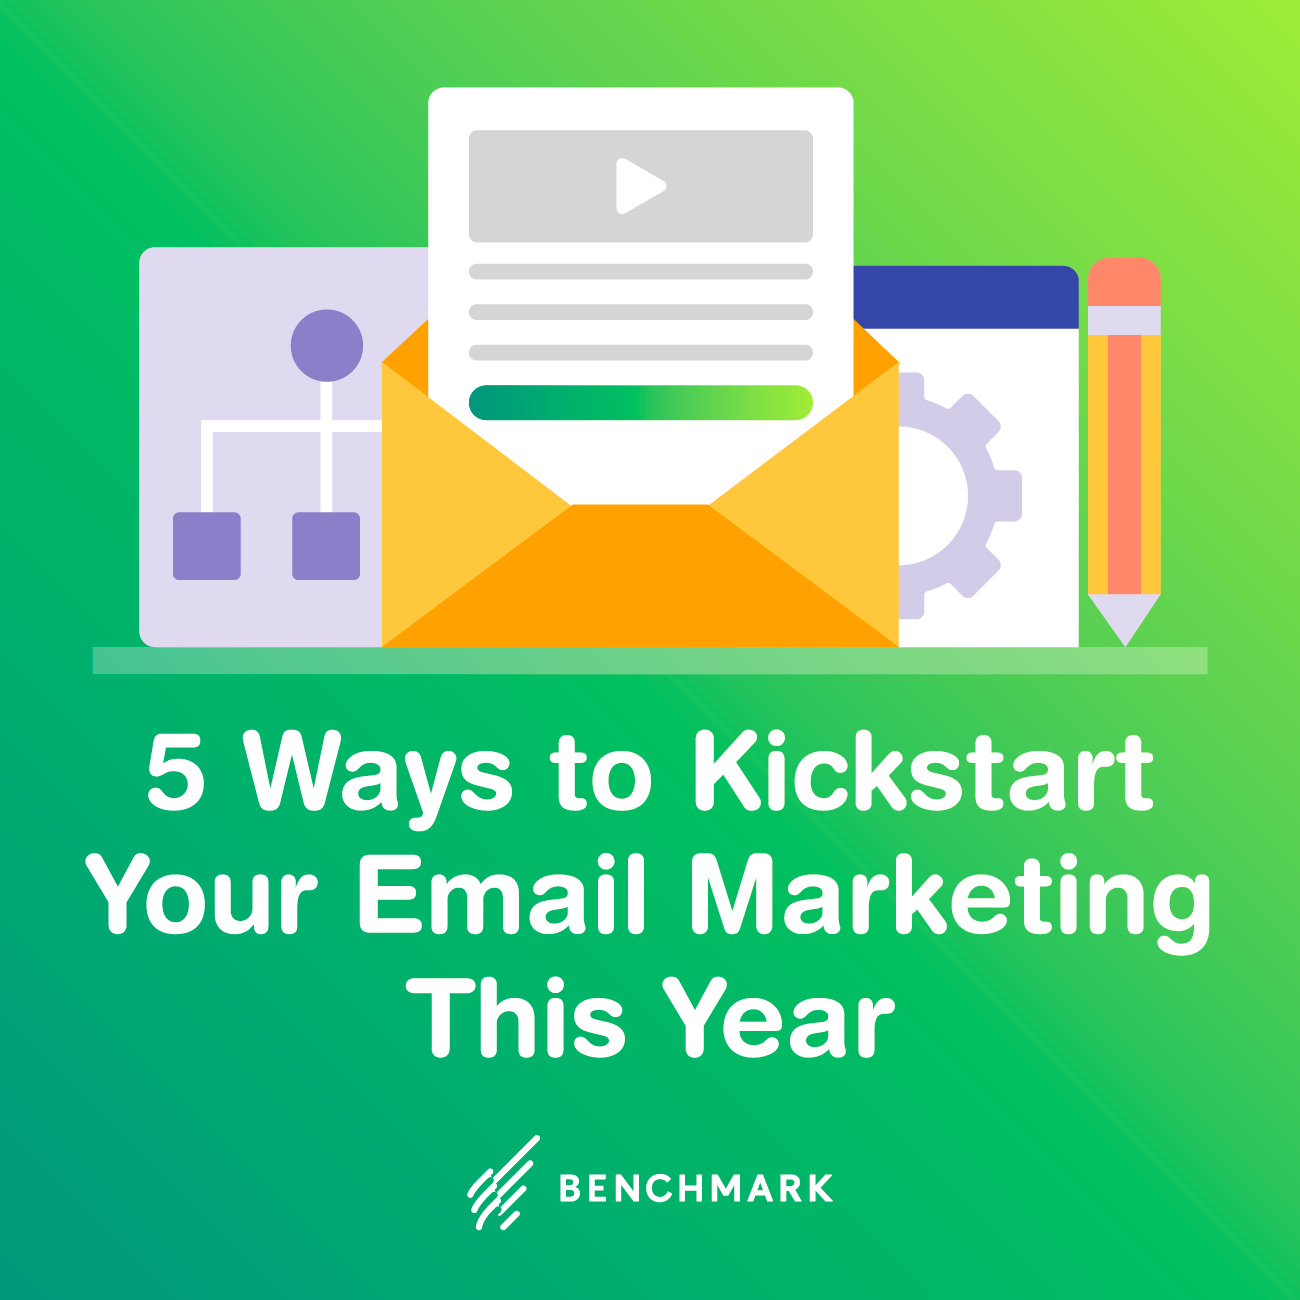 5 Ways to Kickstart Your Email Marketing This Year